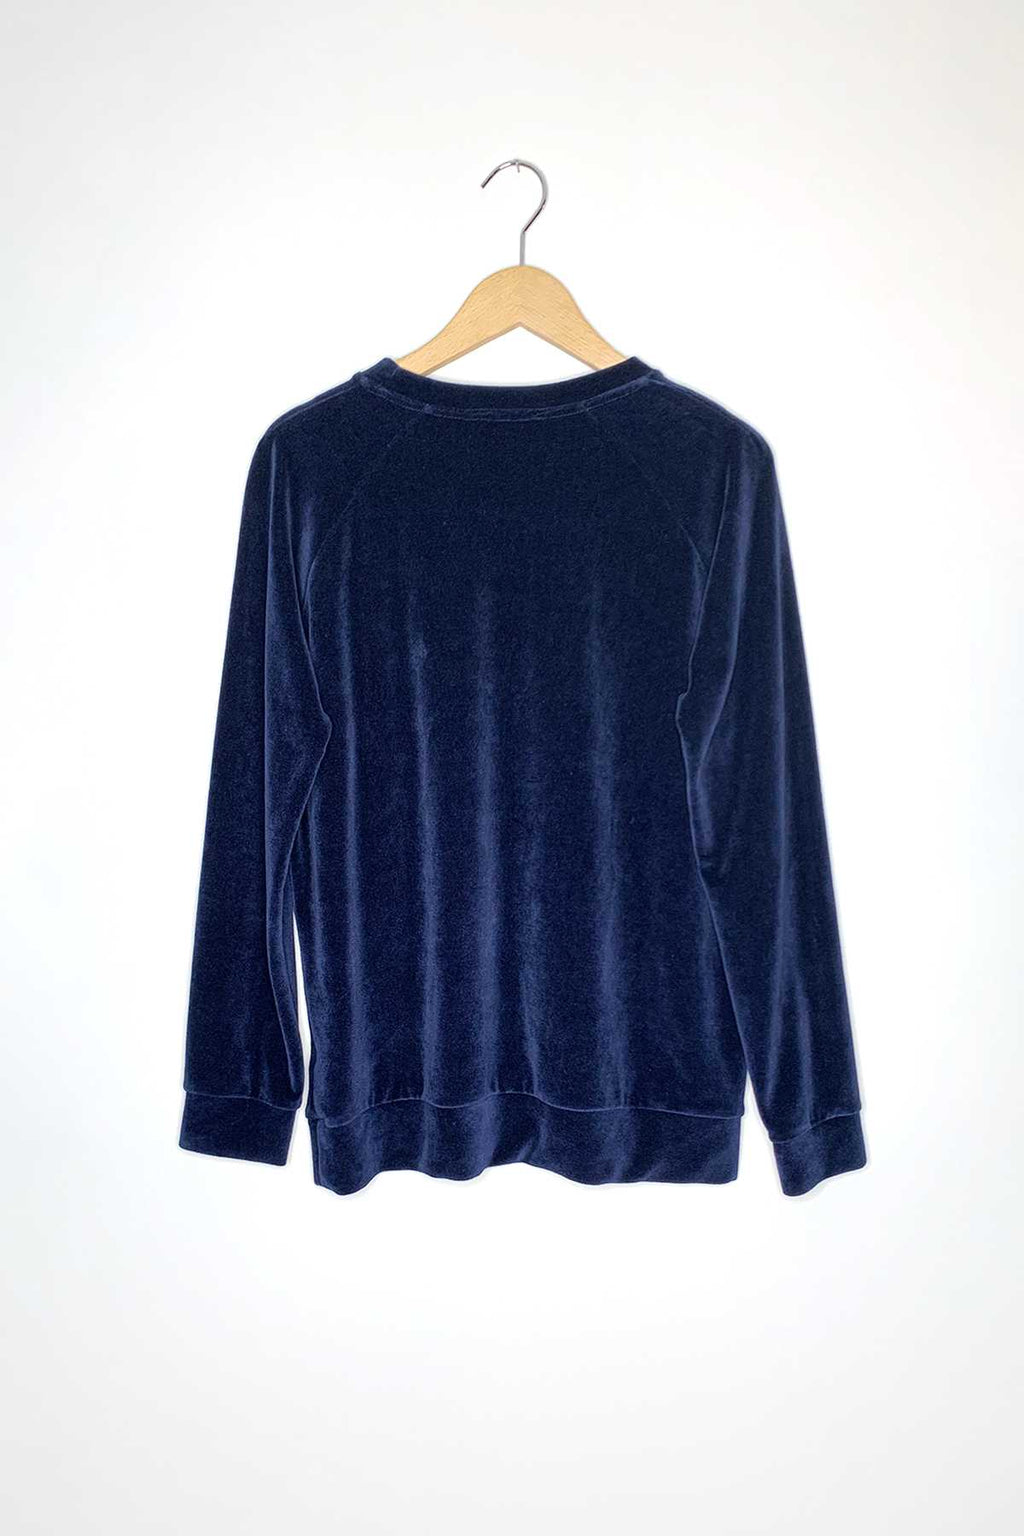 #479 - OMM navy velvet effect sweatshirt // Size S YUJ - House of Mindfulness